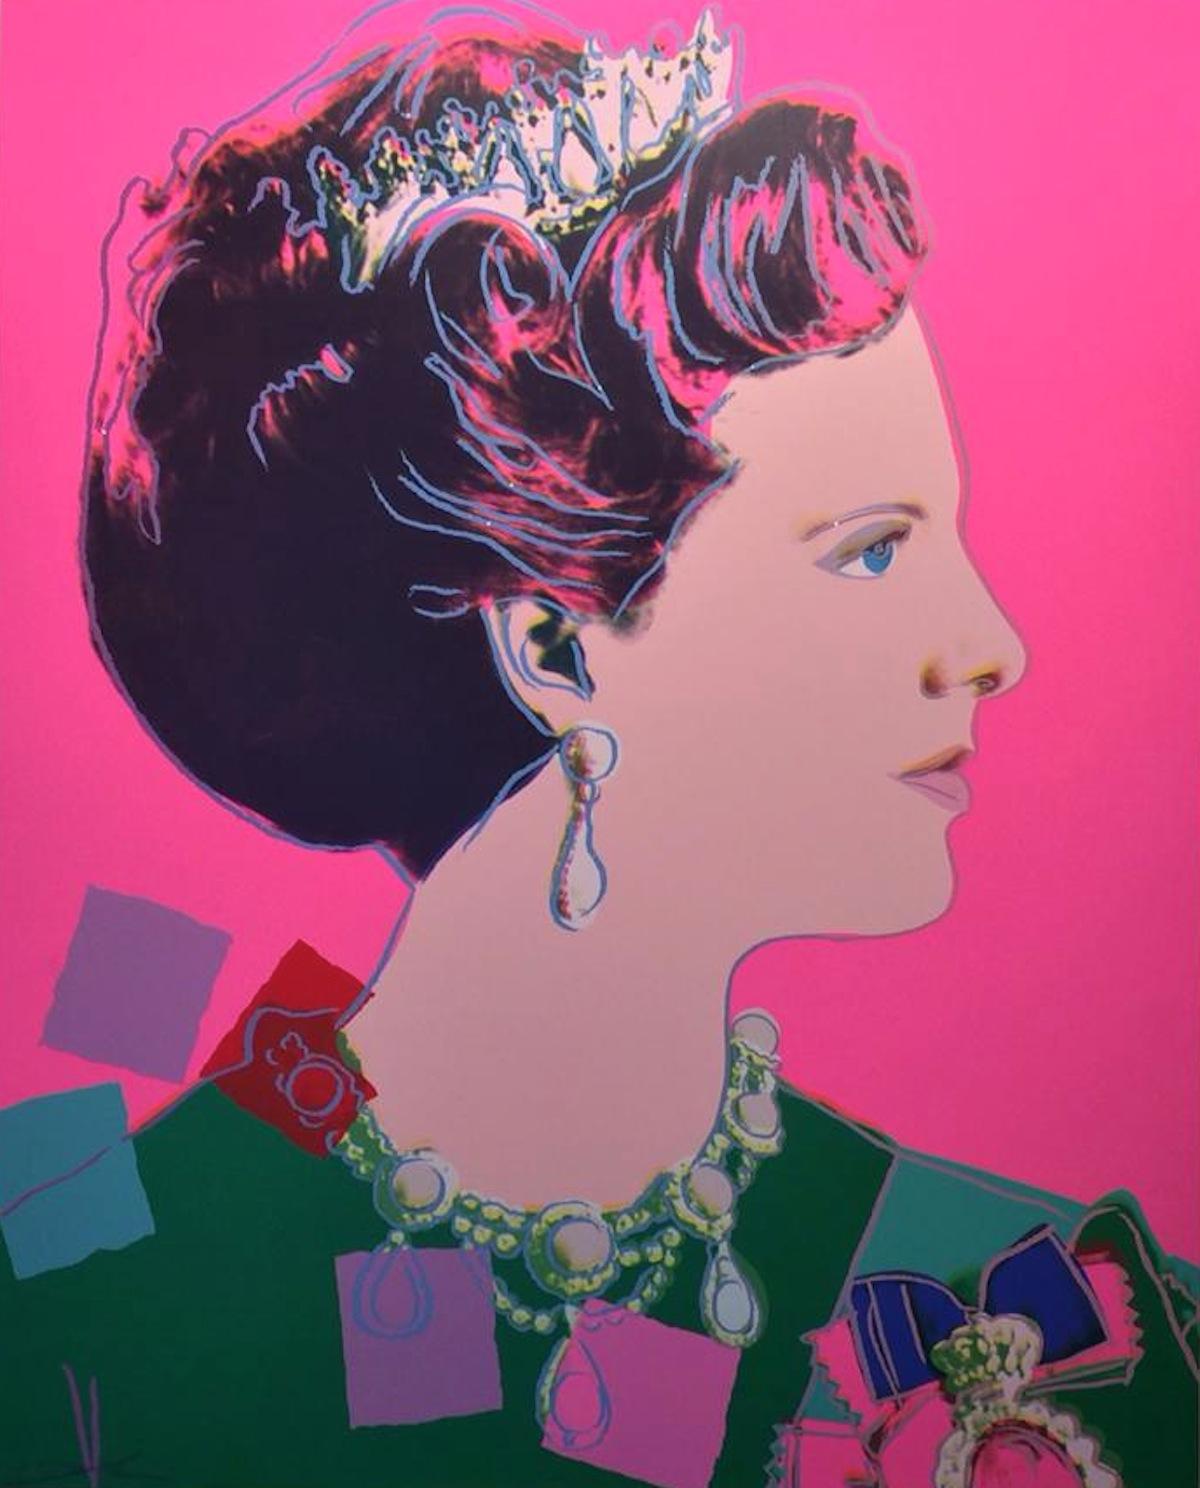 Andy Warhol Portrait Print - Queen Margrethe II of Denmark (FS II.345)